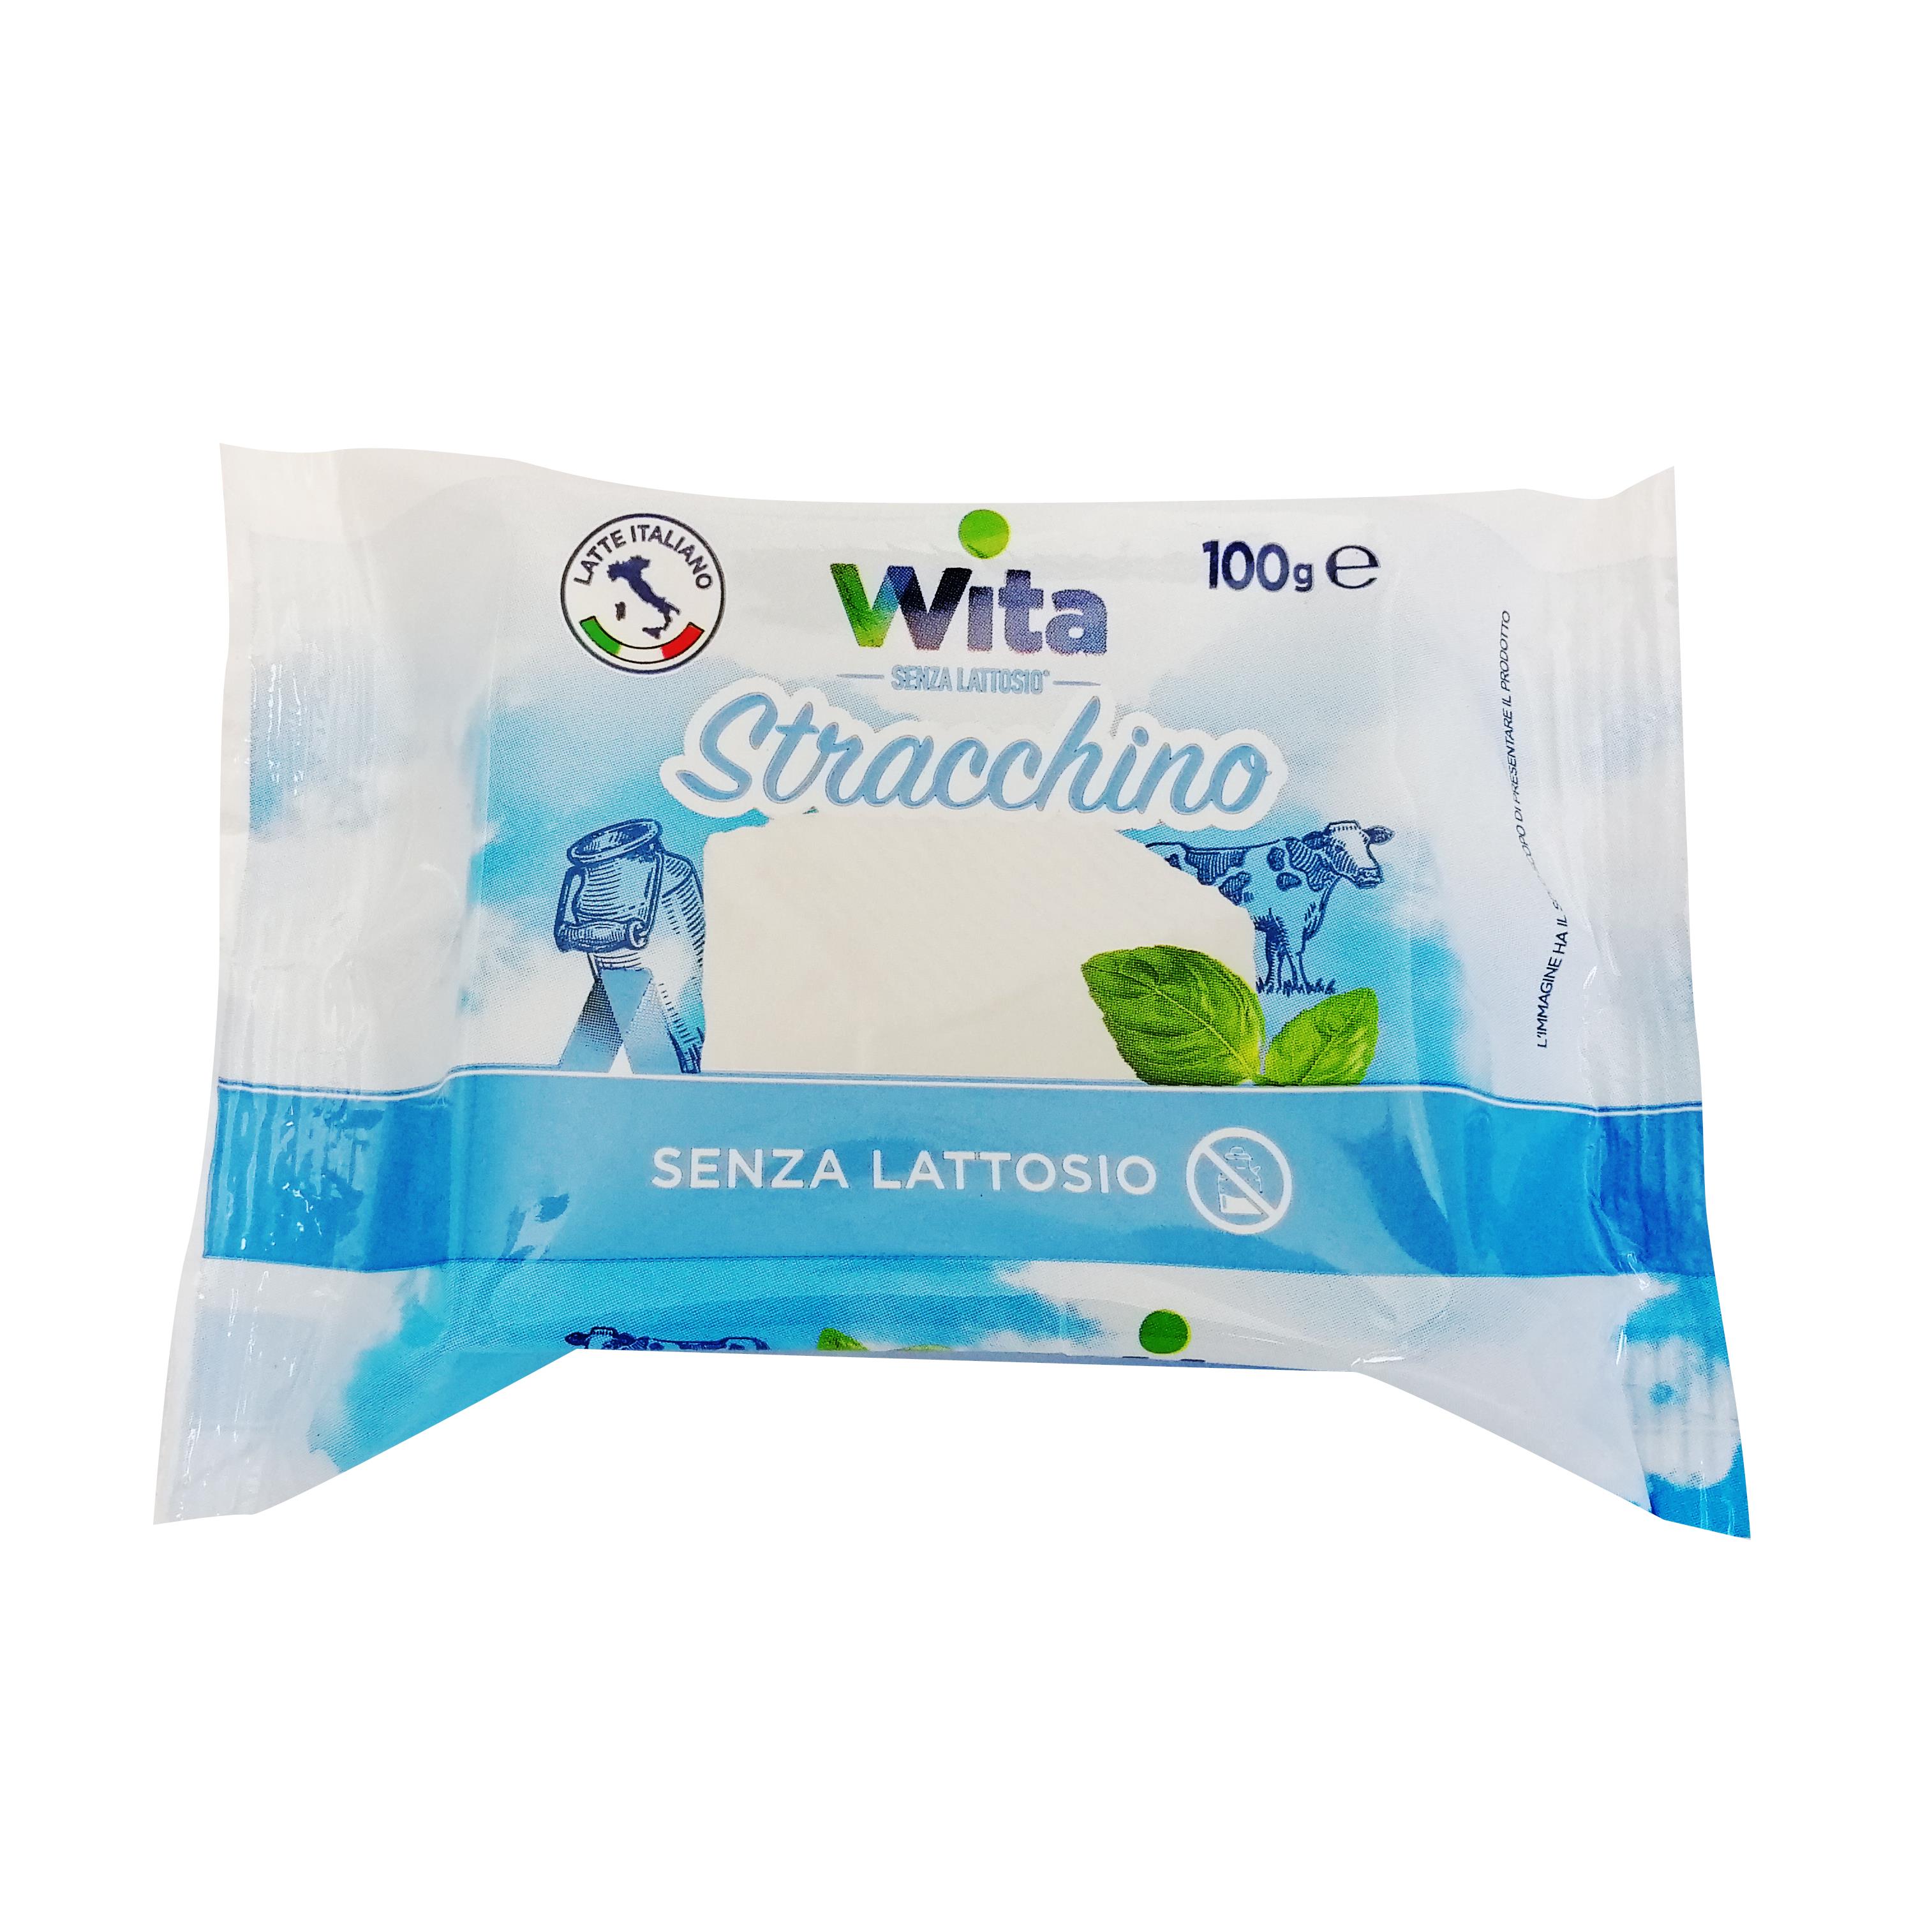 Stracchino WITA senza lattosio - 100 g